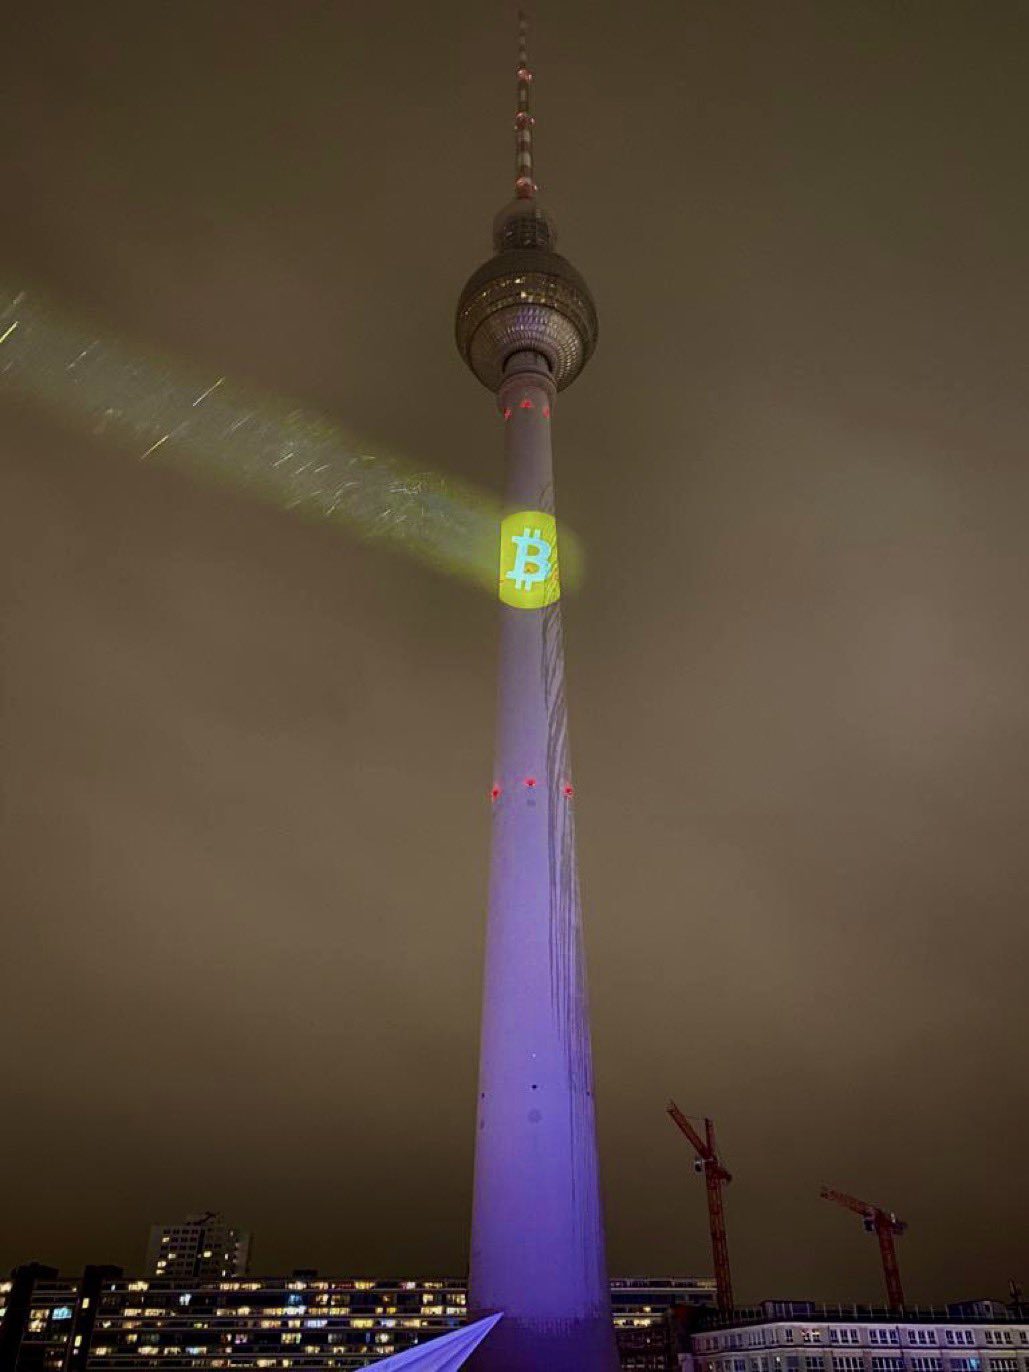 Das Logo von Bitcoin schmückt den Berliner Fernsehturm